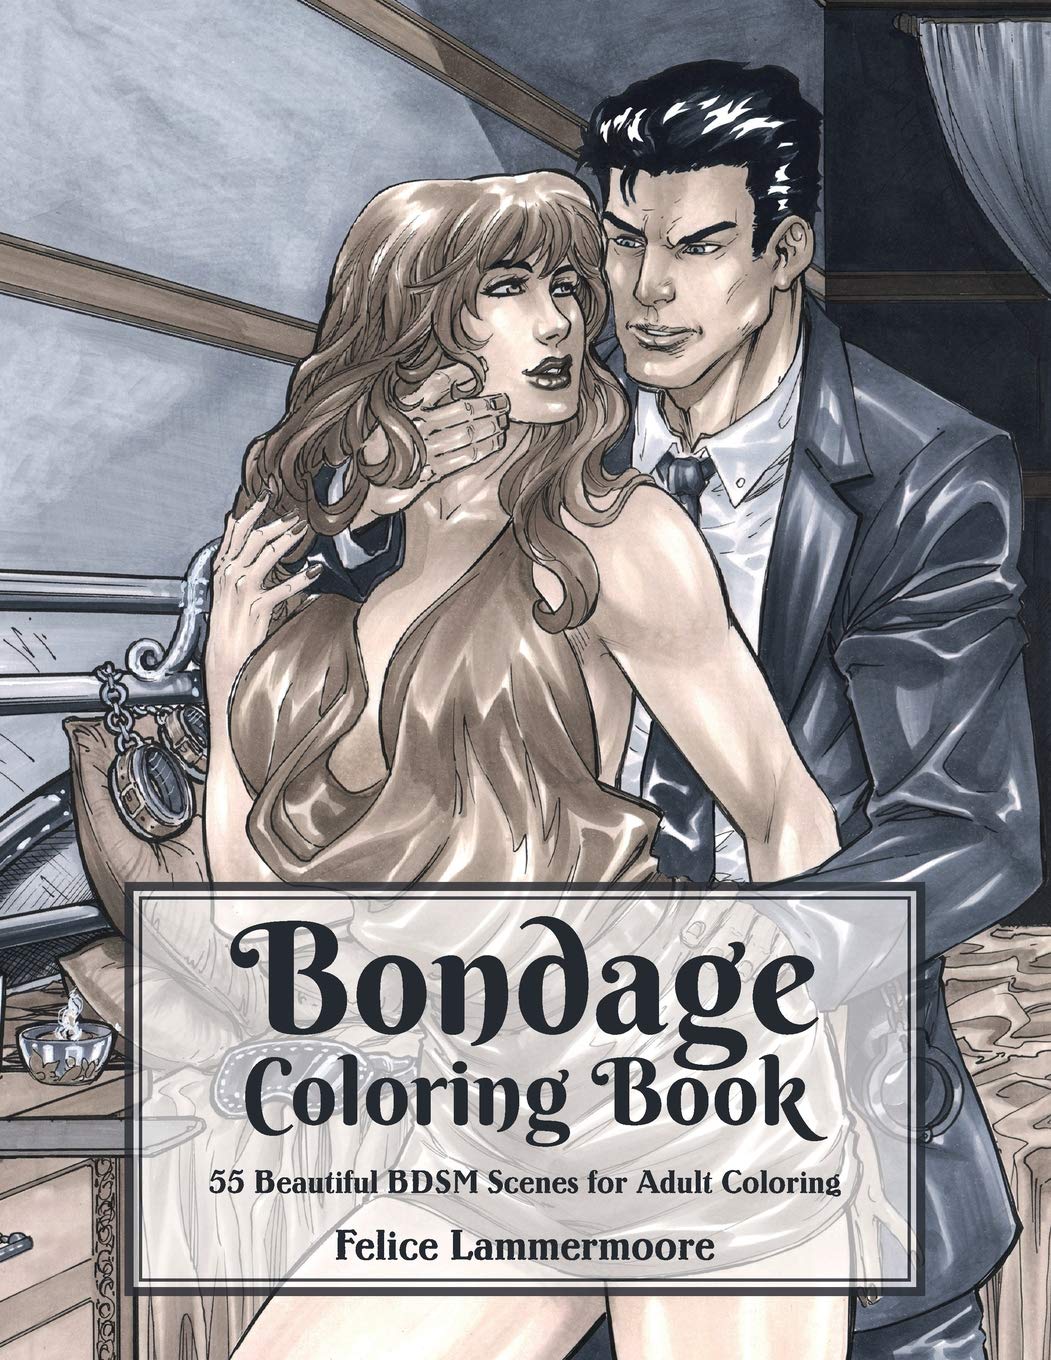 Bondage Coloring Book: 55 Beautiful BDSM Scenes for Adult Coloring (Bondage Coloring Books)